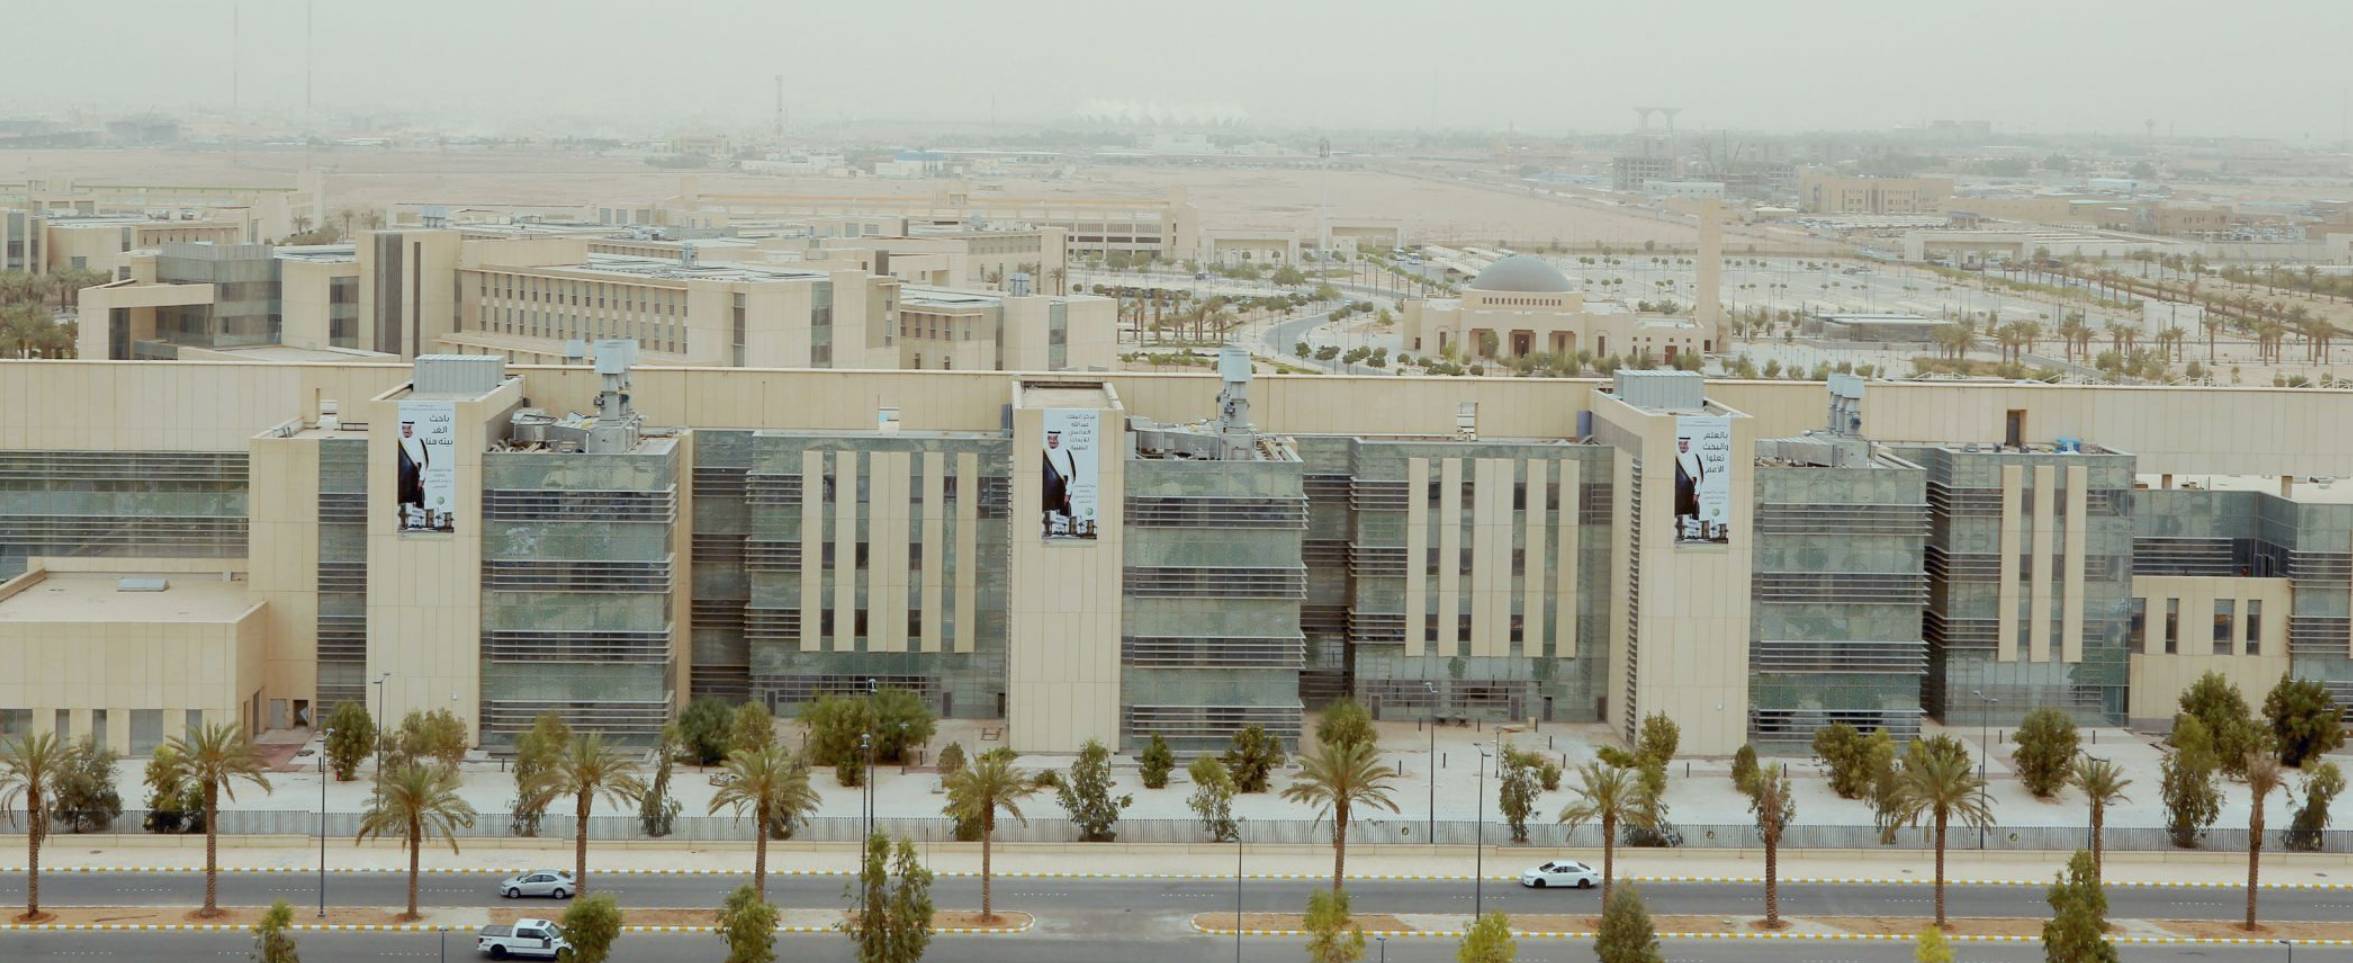 Hospitals in Saudi Arabia invited to participate in coronavirus clinical trials